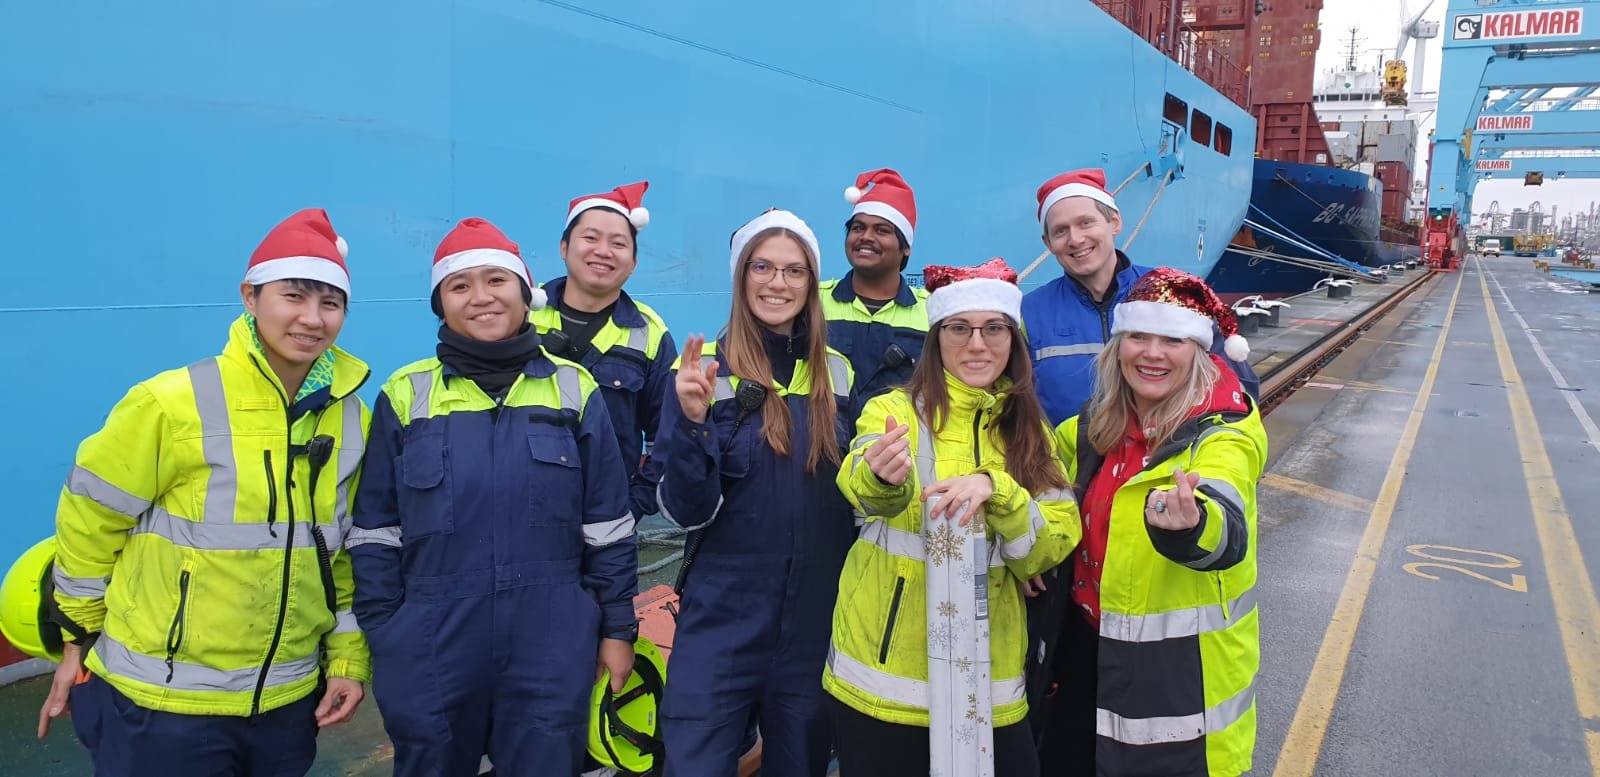 Singing Christmas songs with Crew Vayenga Maersk.jpg